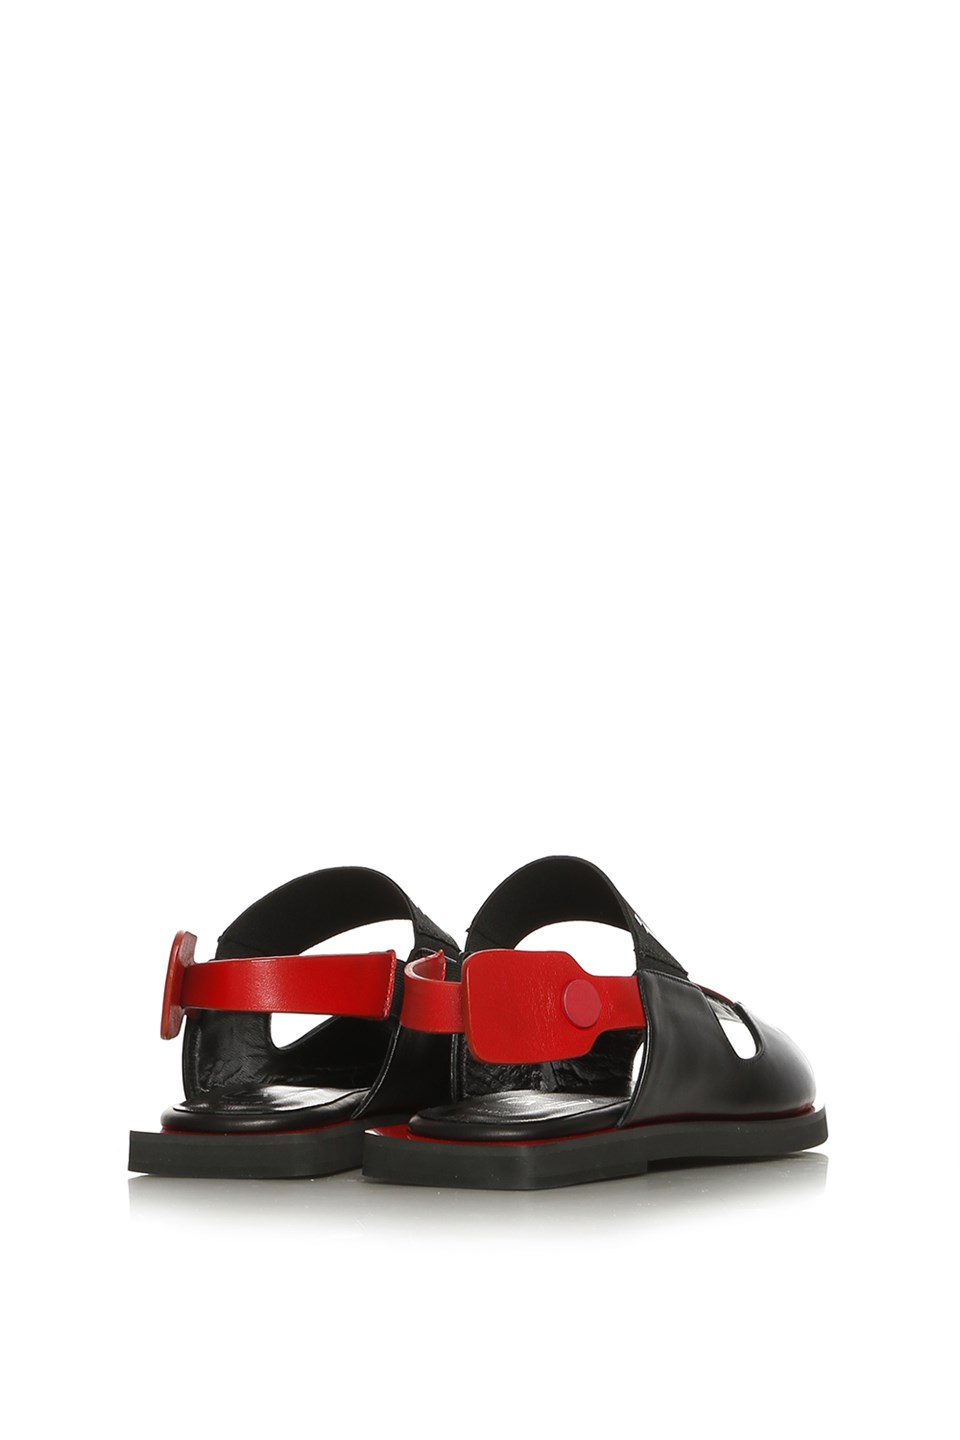 Dana Women's Sandal Black Leather Red - İLVİ